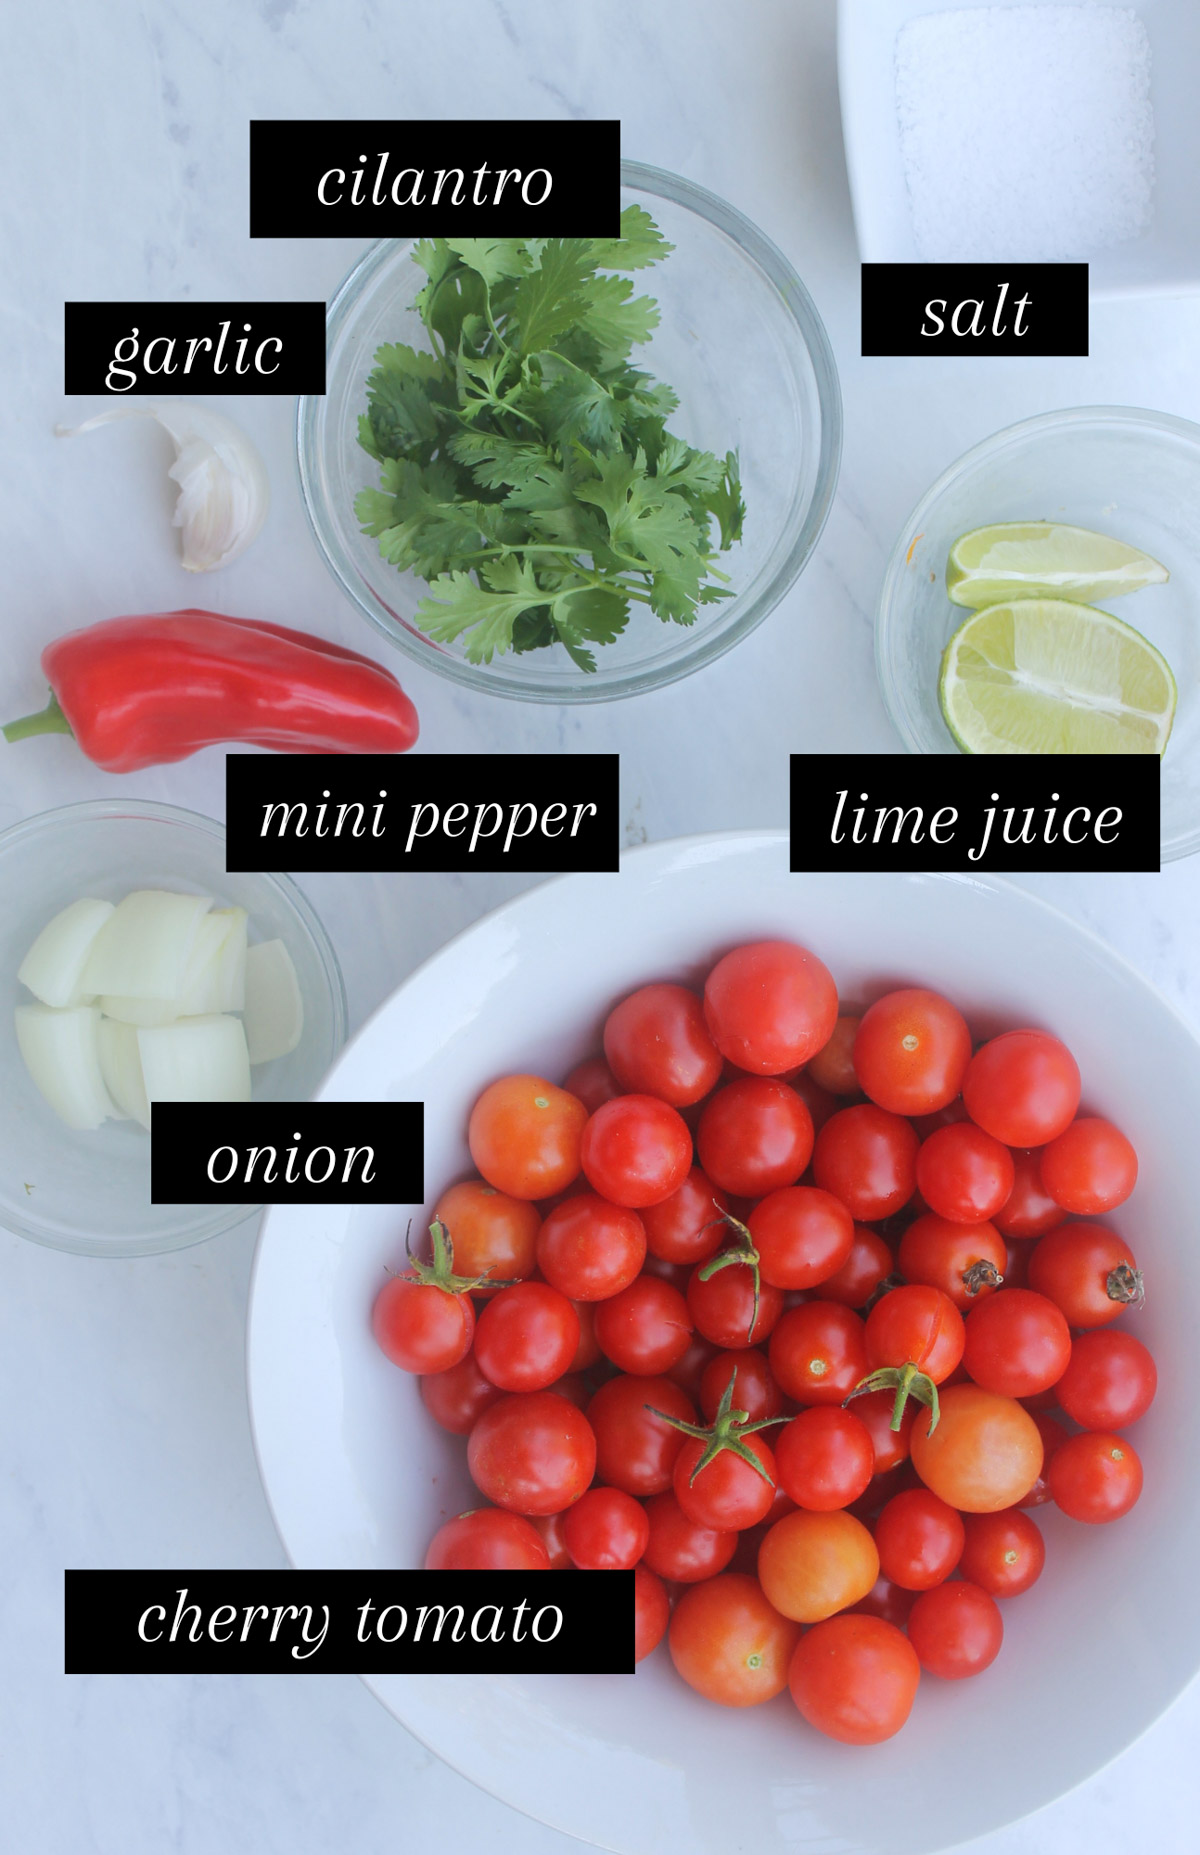 Labeled ingredients for cherry tomato pico de gallo.